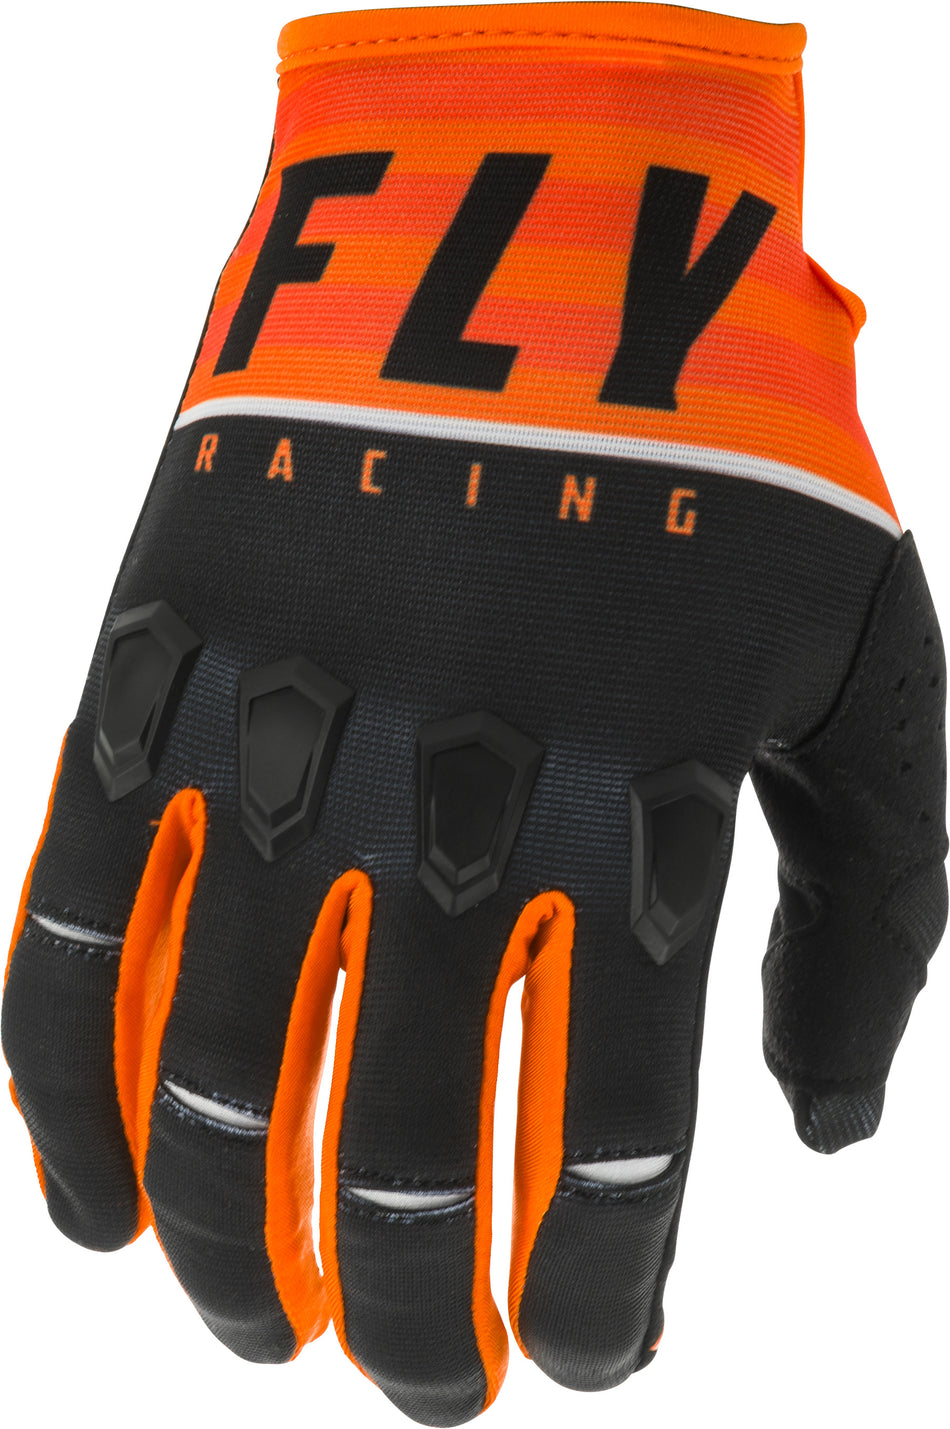 FLY RACING Kinetic K120 Gloves Orange/Black/White Sz 06 373-41706